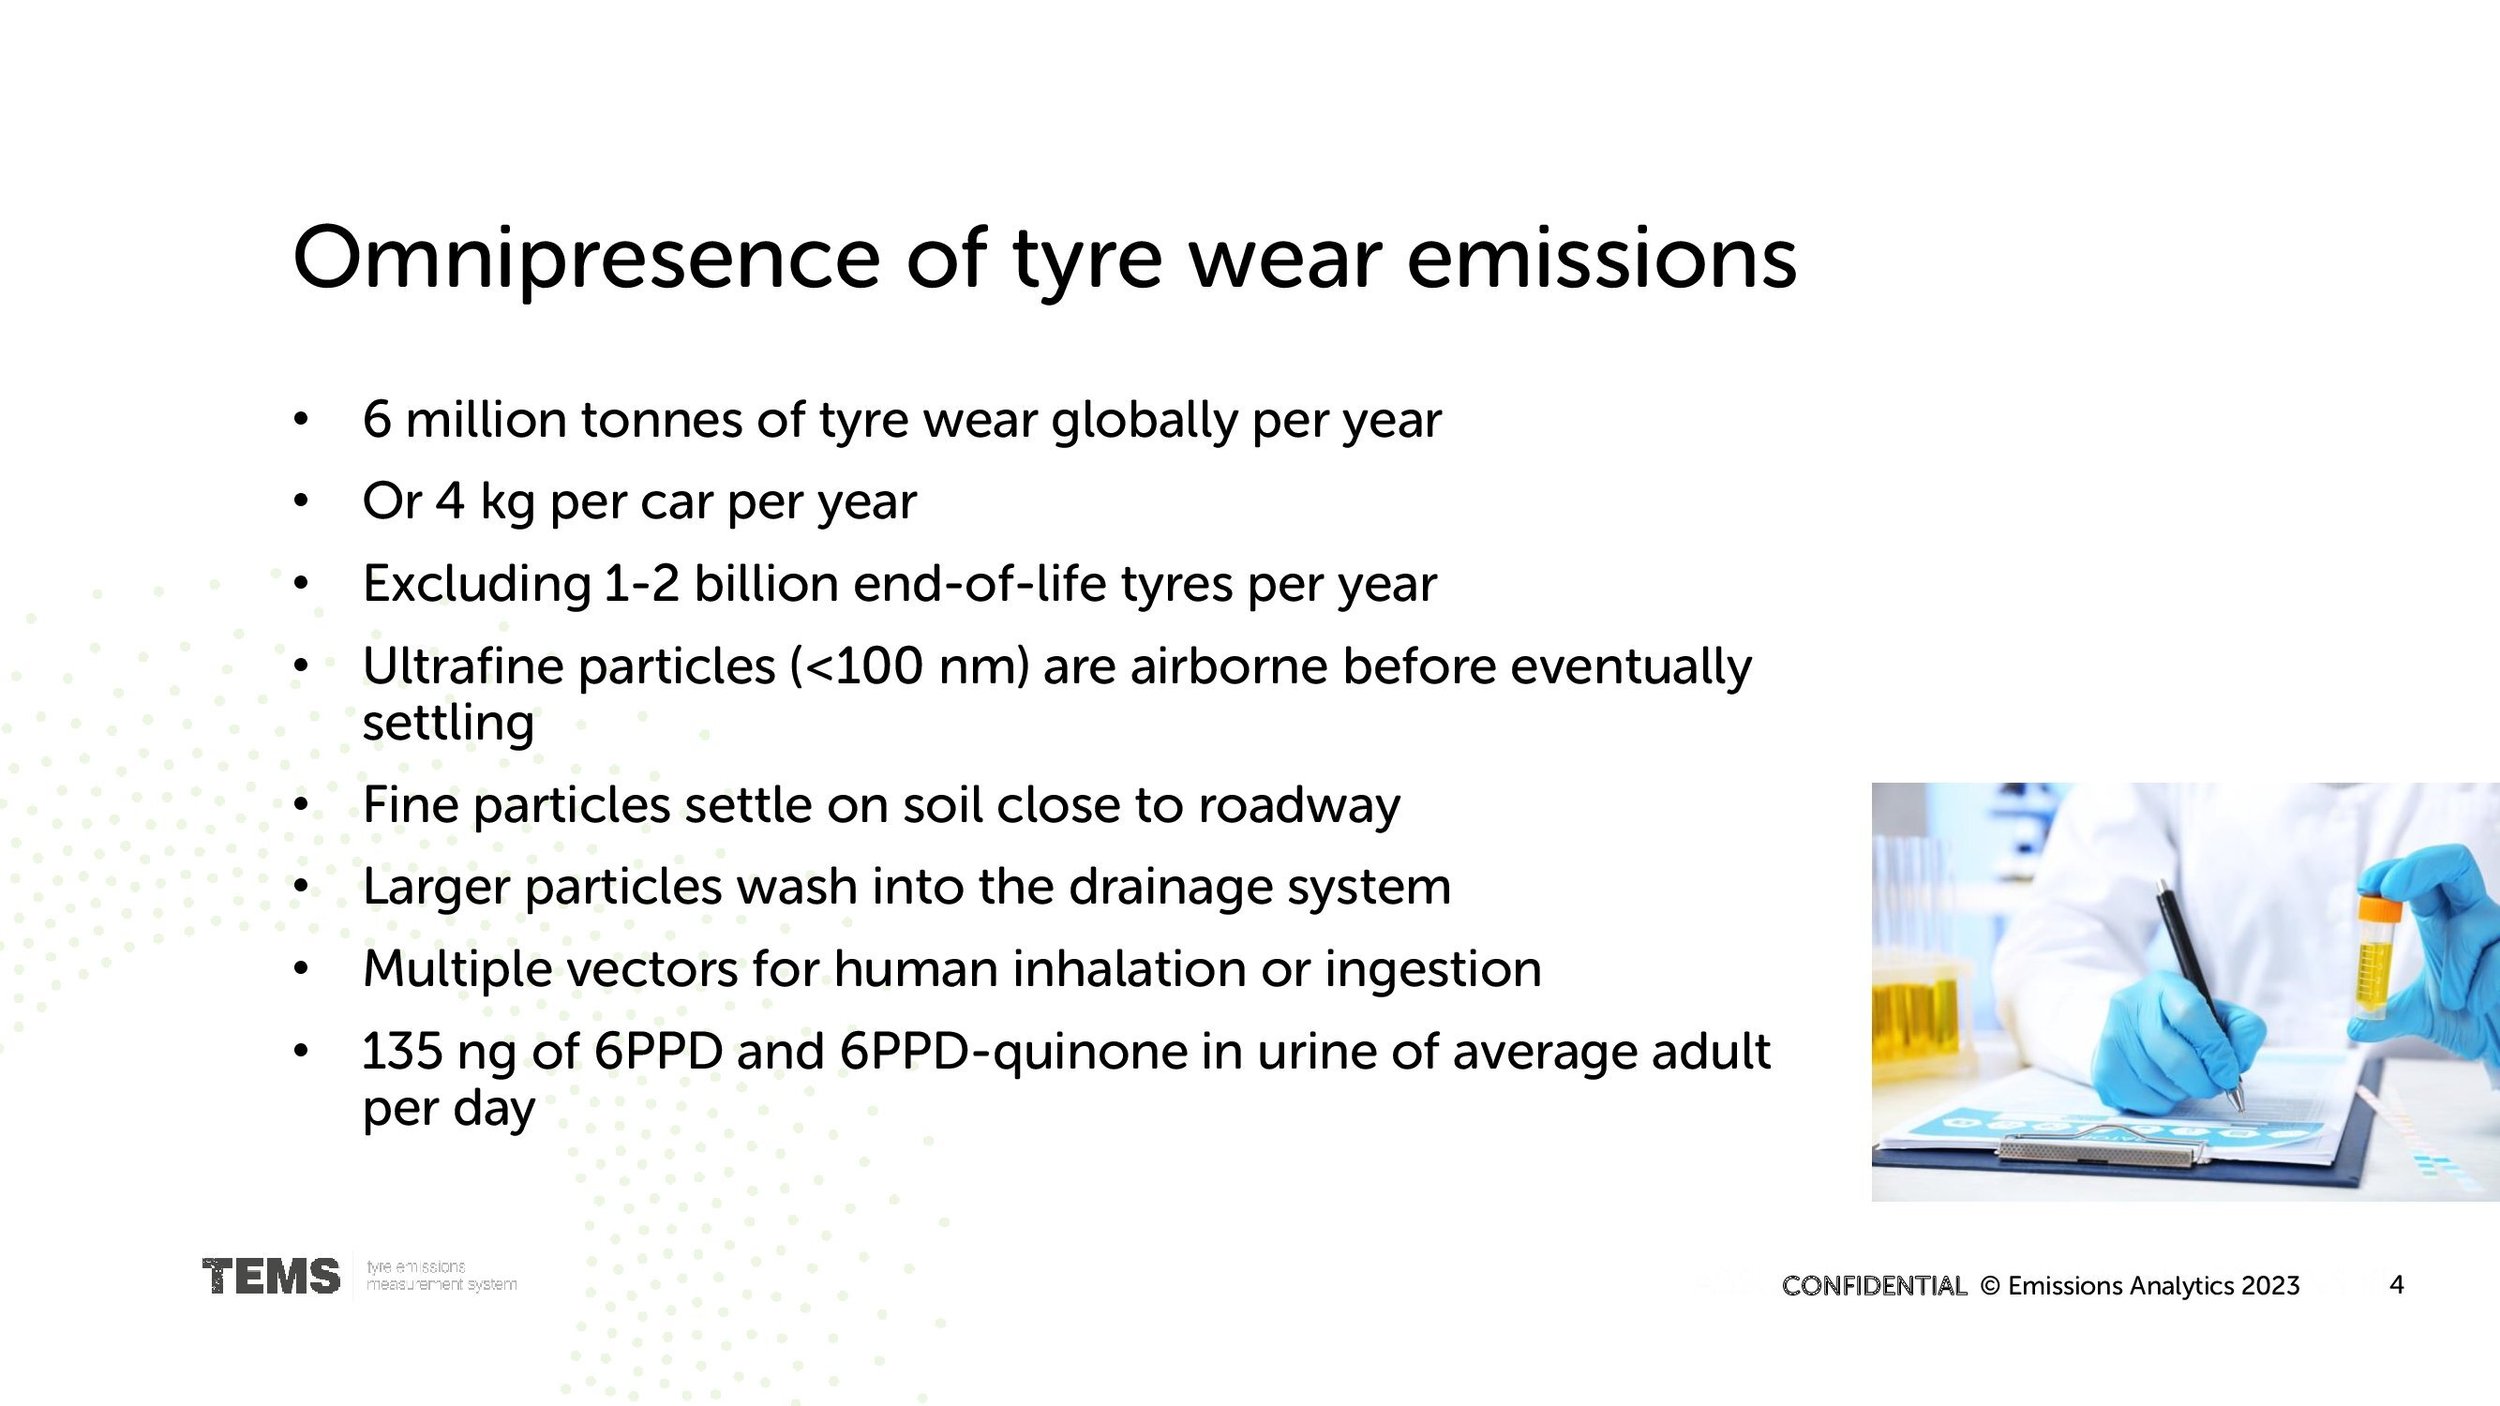 Emissions Analytics Automotive Tire Technology January 2023 v2_00004.jpg